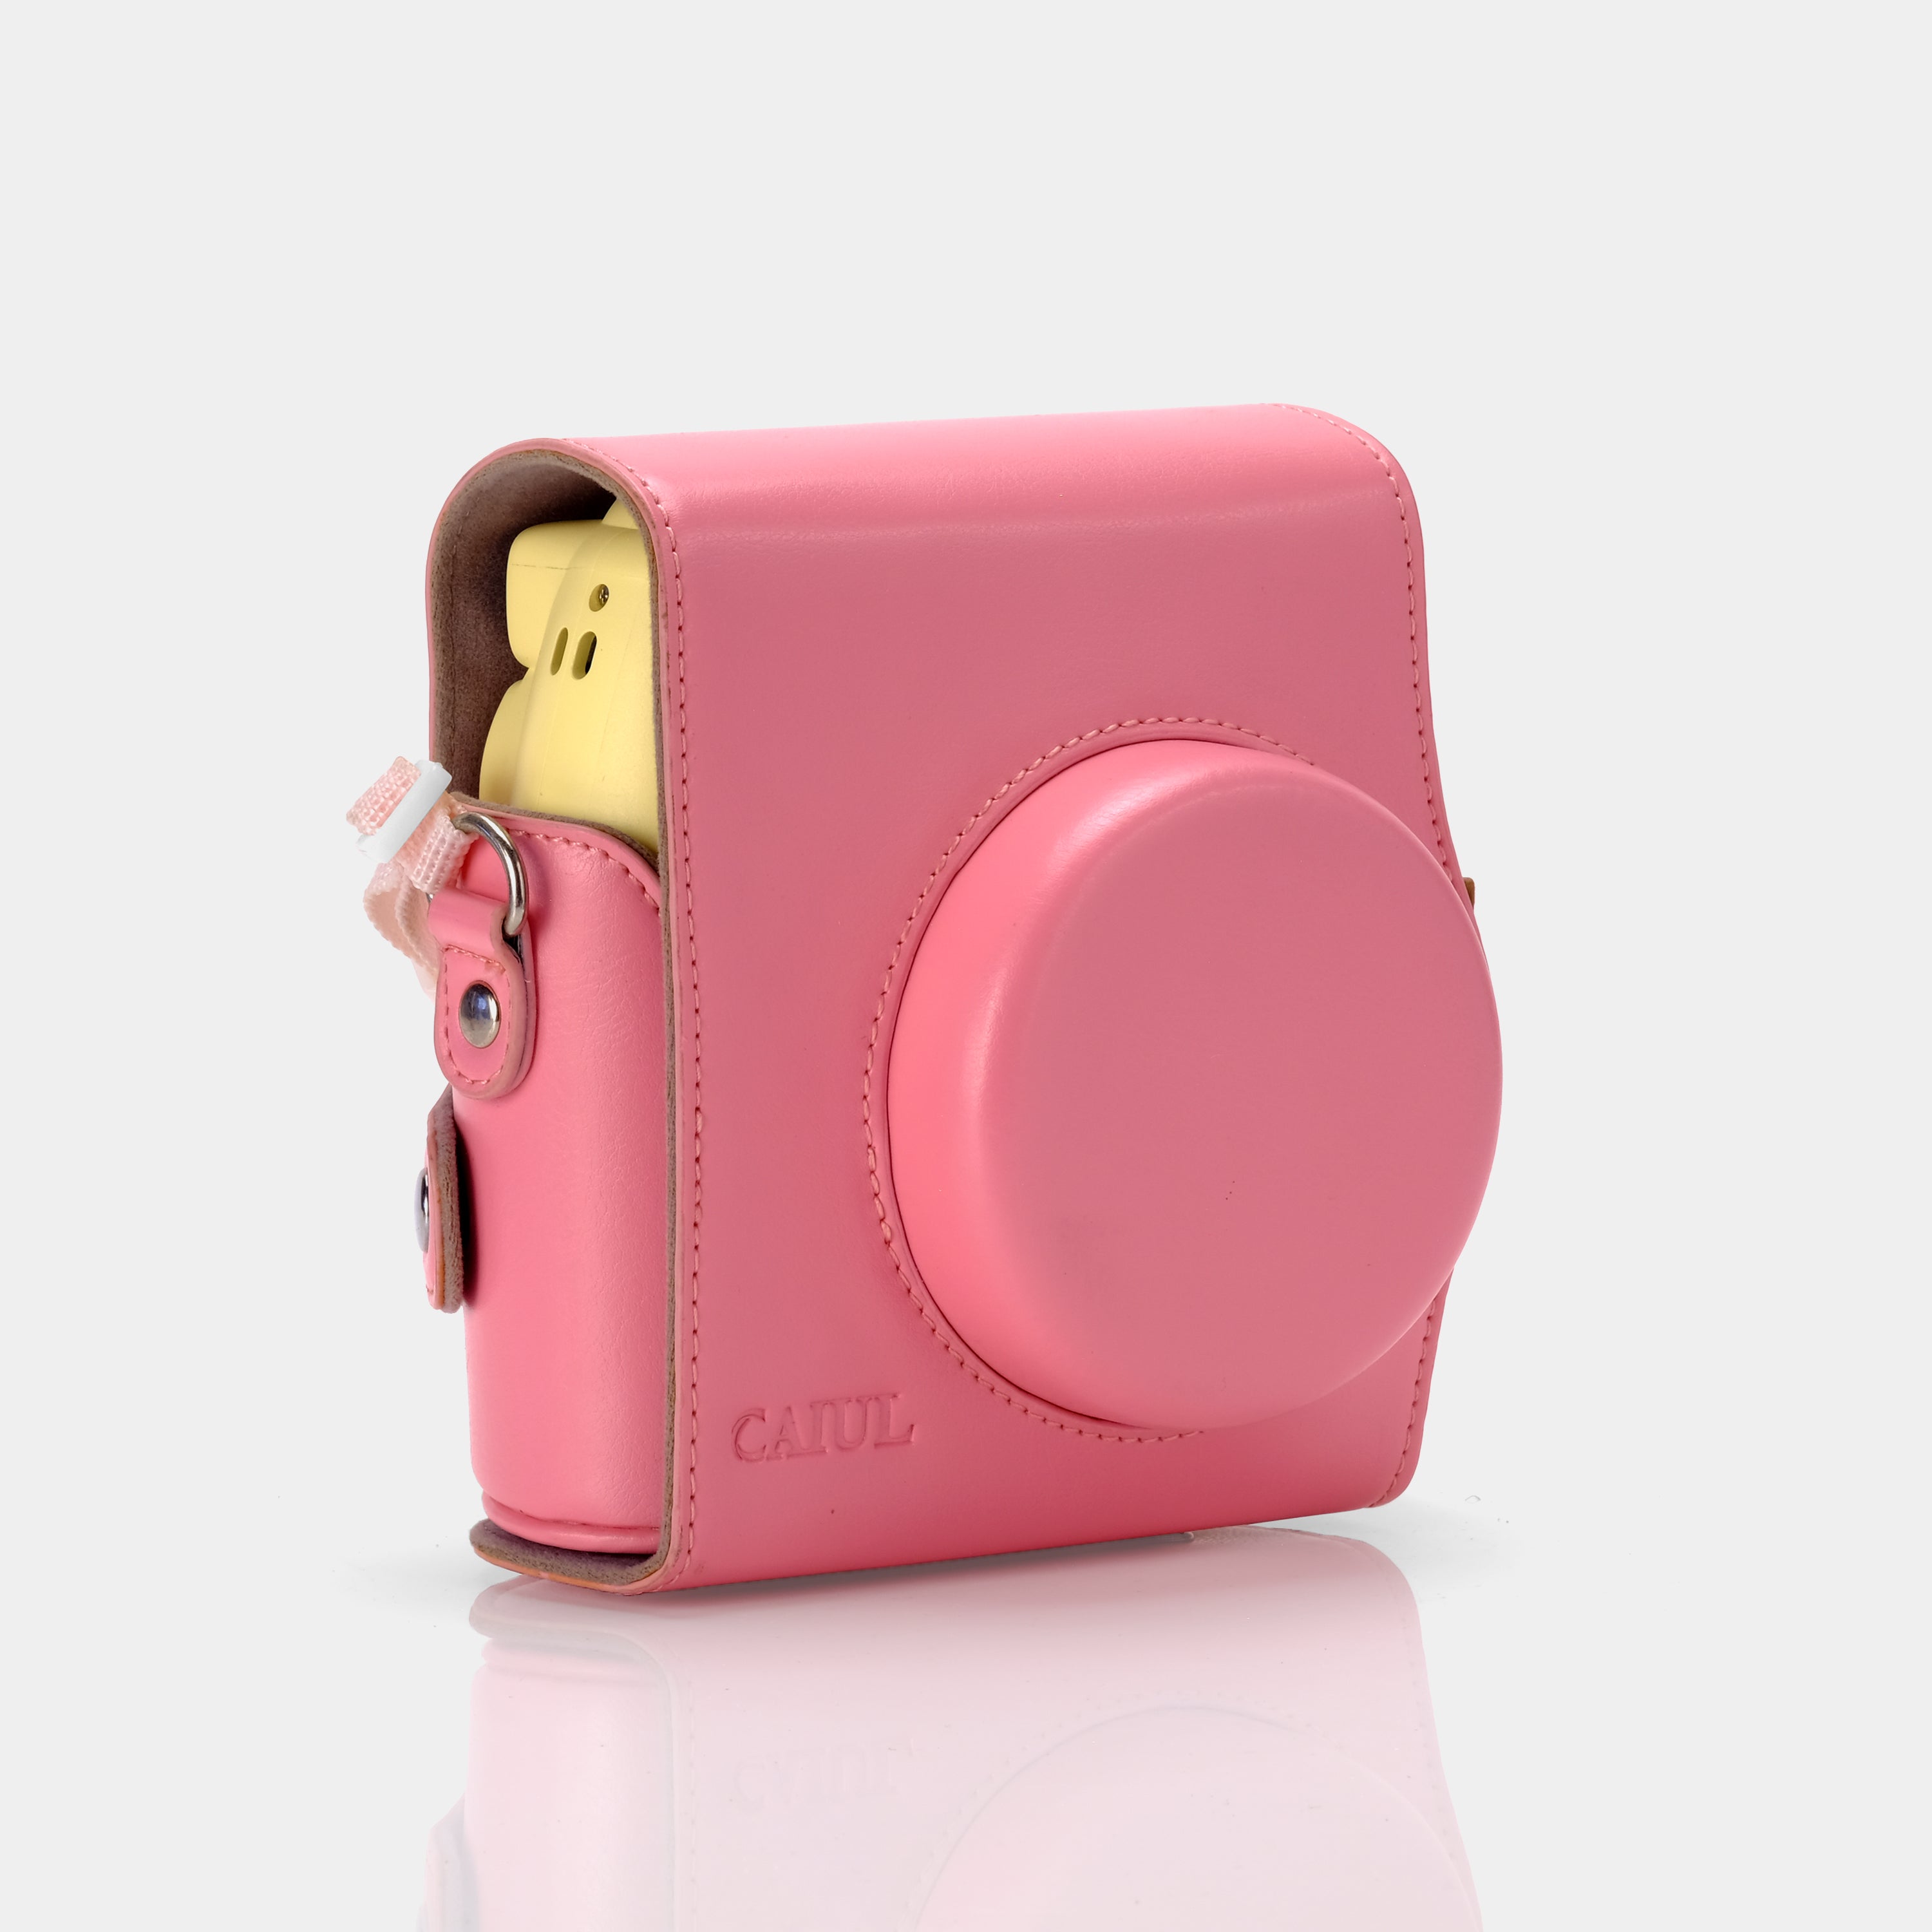 Fujifilm Instax Mini 8 Yellow Instant Film Camera With Pink Bag - Refurbished